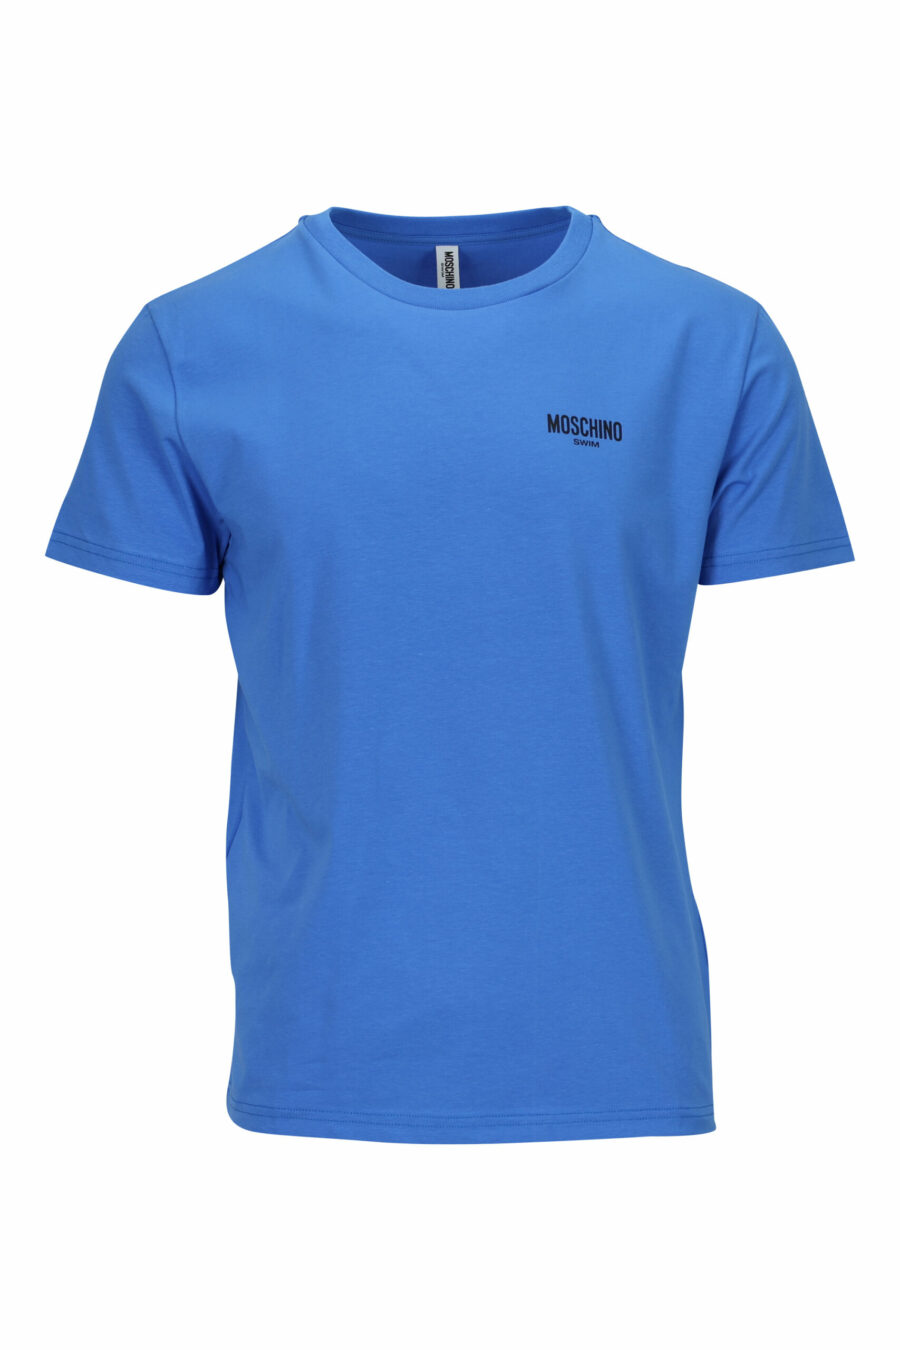 T-shirt bleu avec minilogue "nage" - 667113673417 échelonné